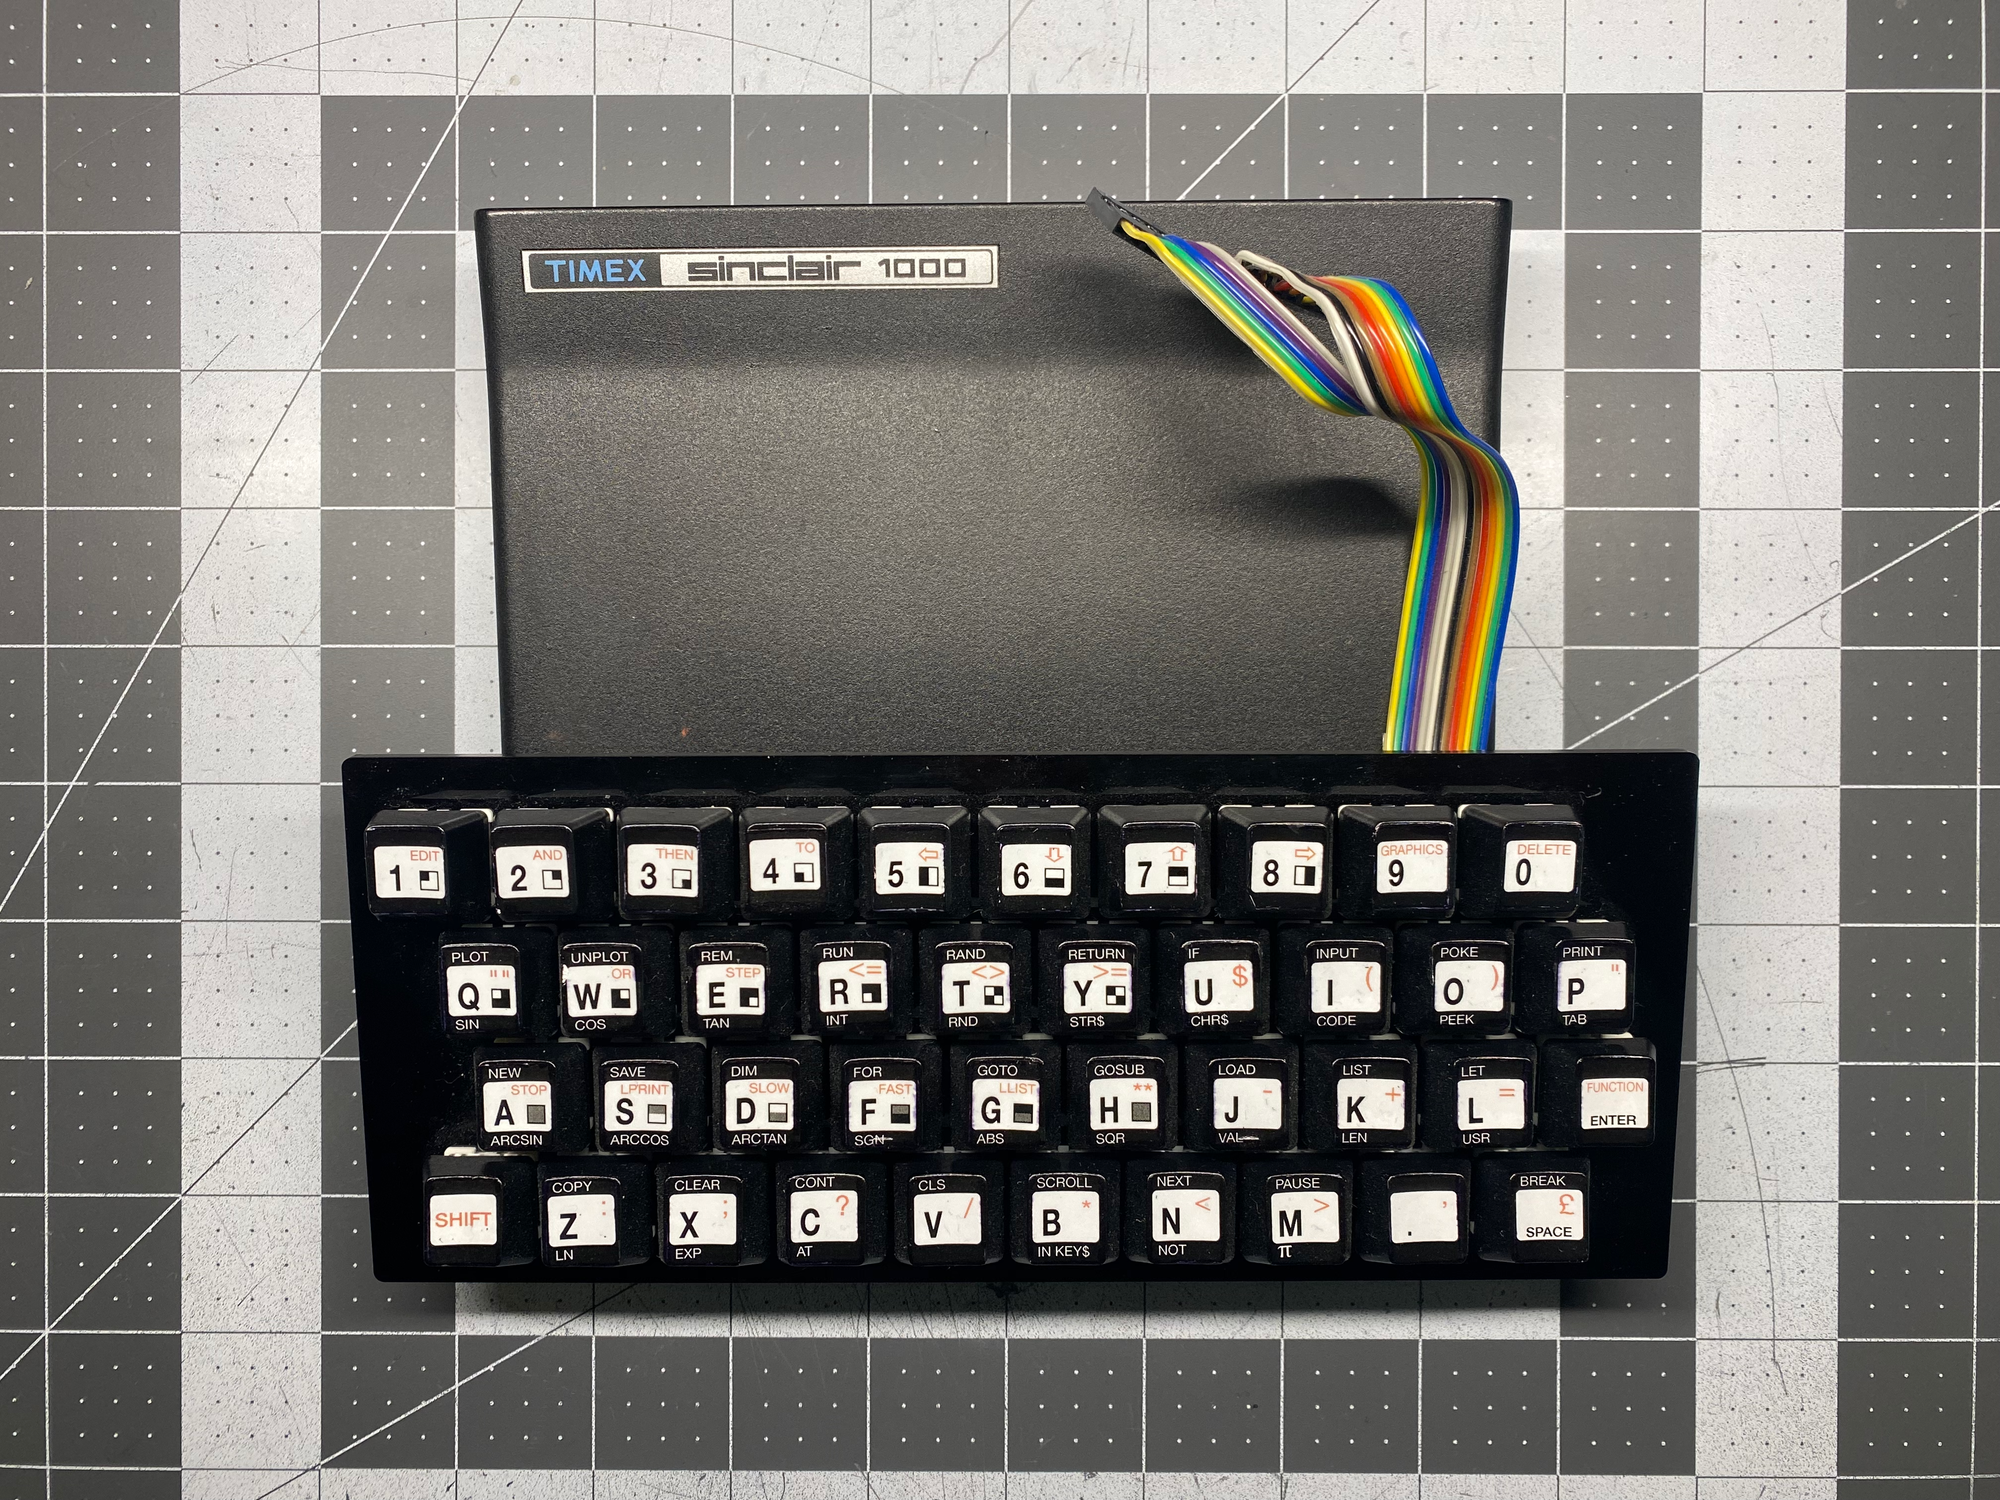 ZX81/TIMEX-SINCLAIR 1000 3D Printed Case - Part 1